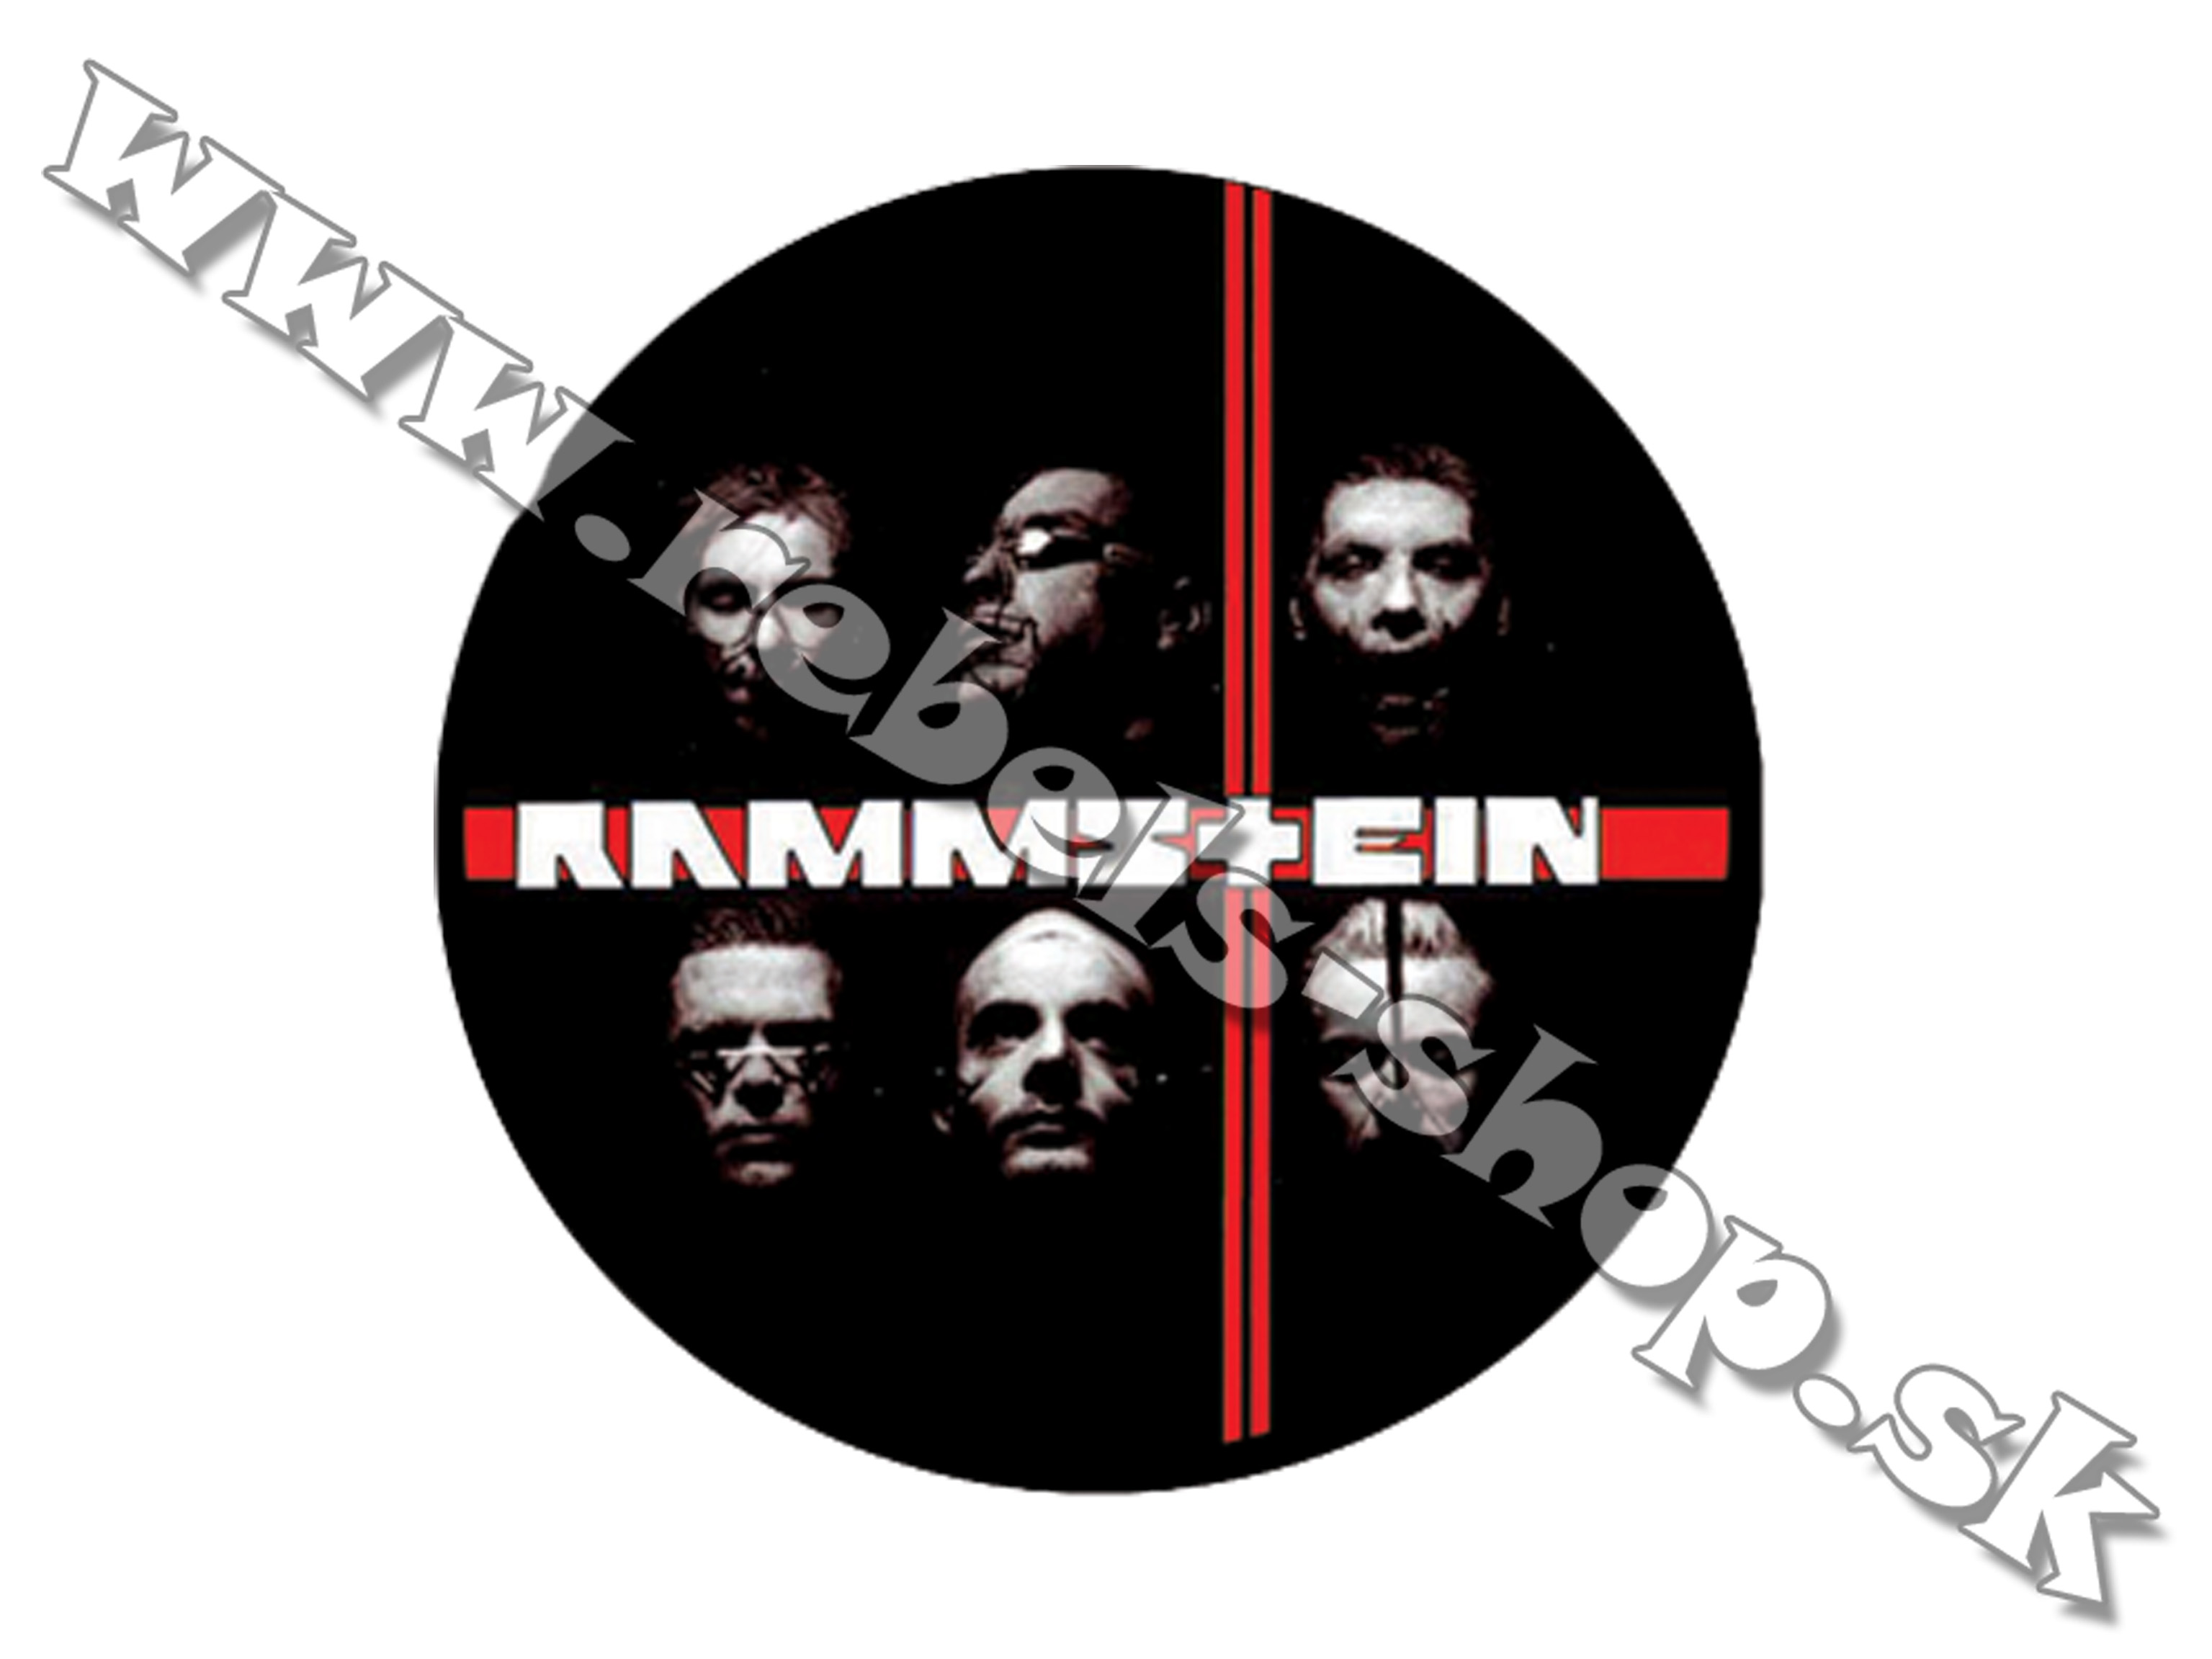 Odznak "Rammstein"